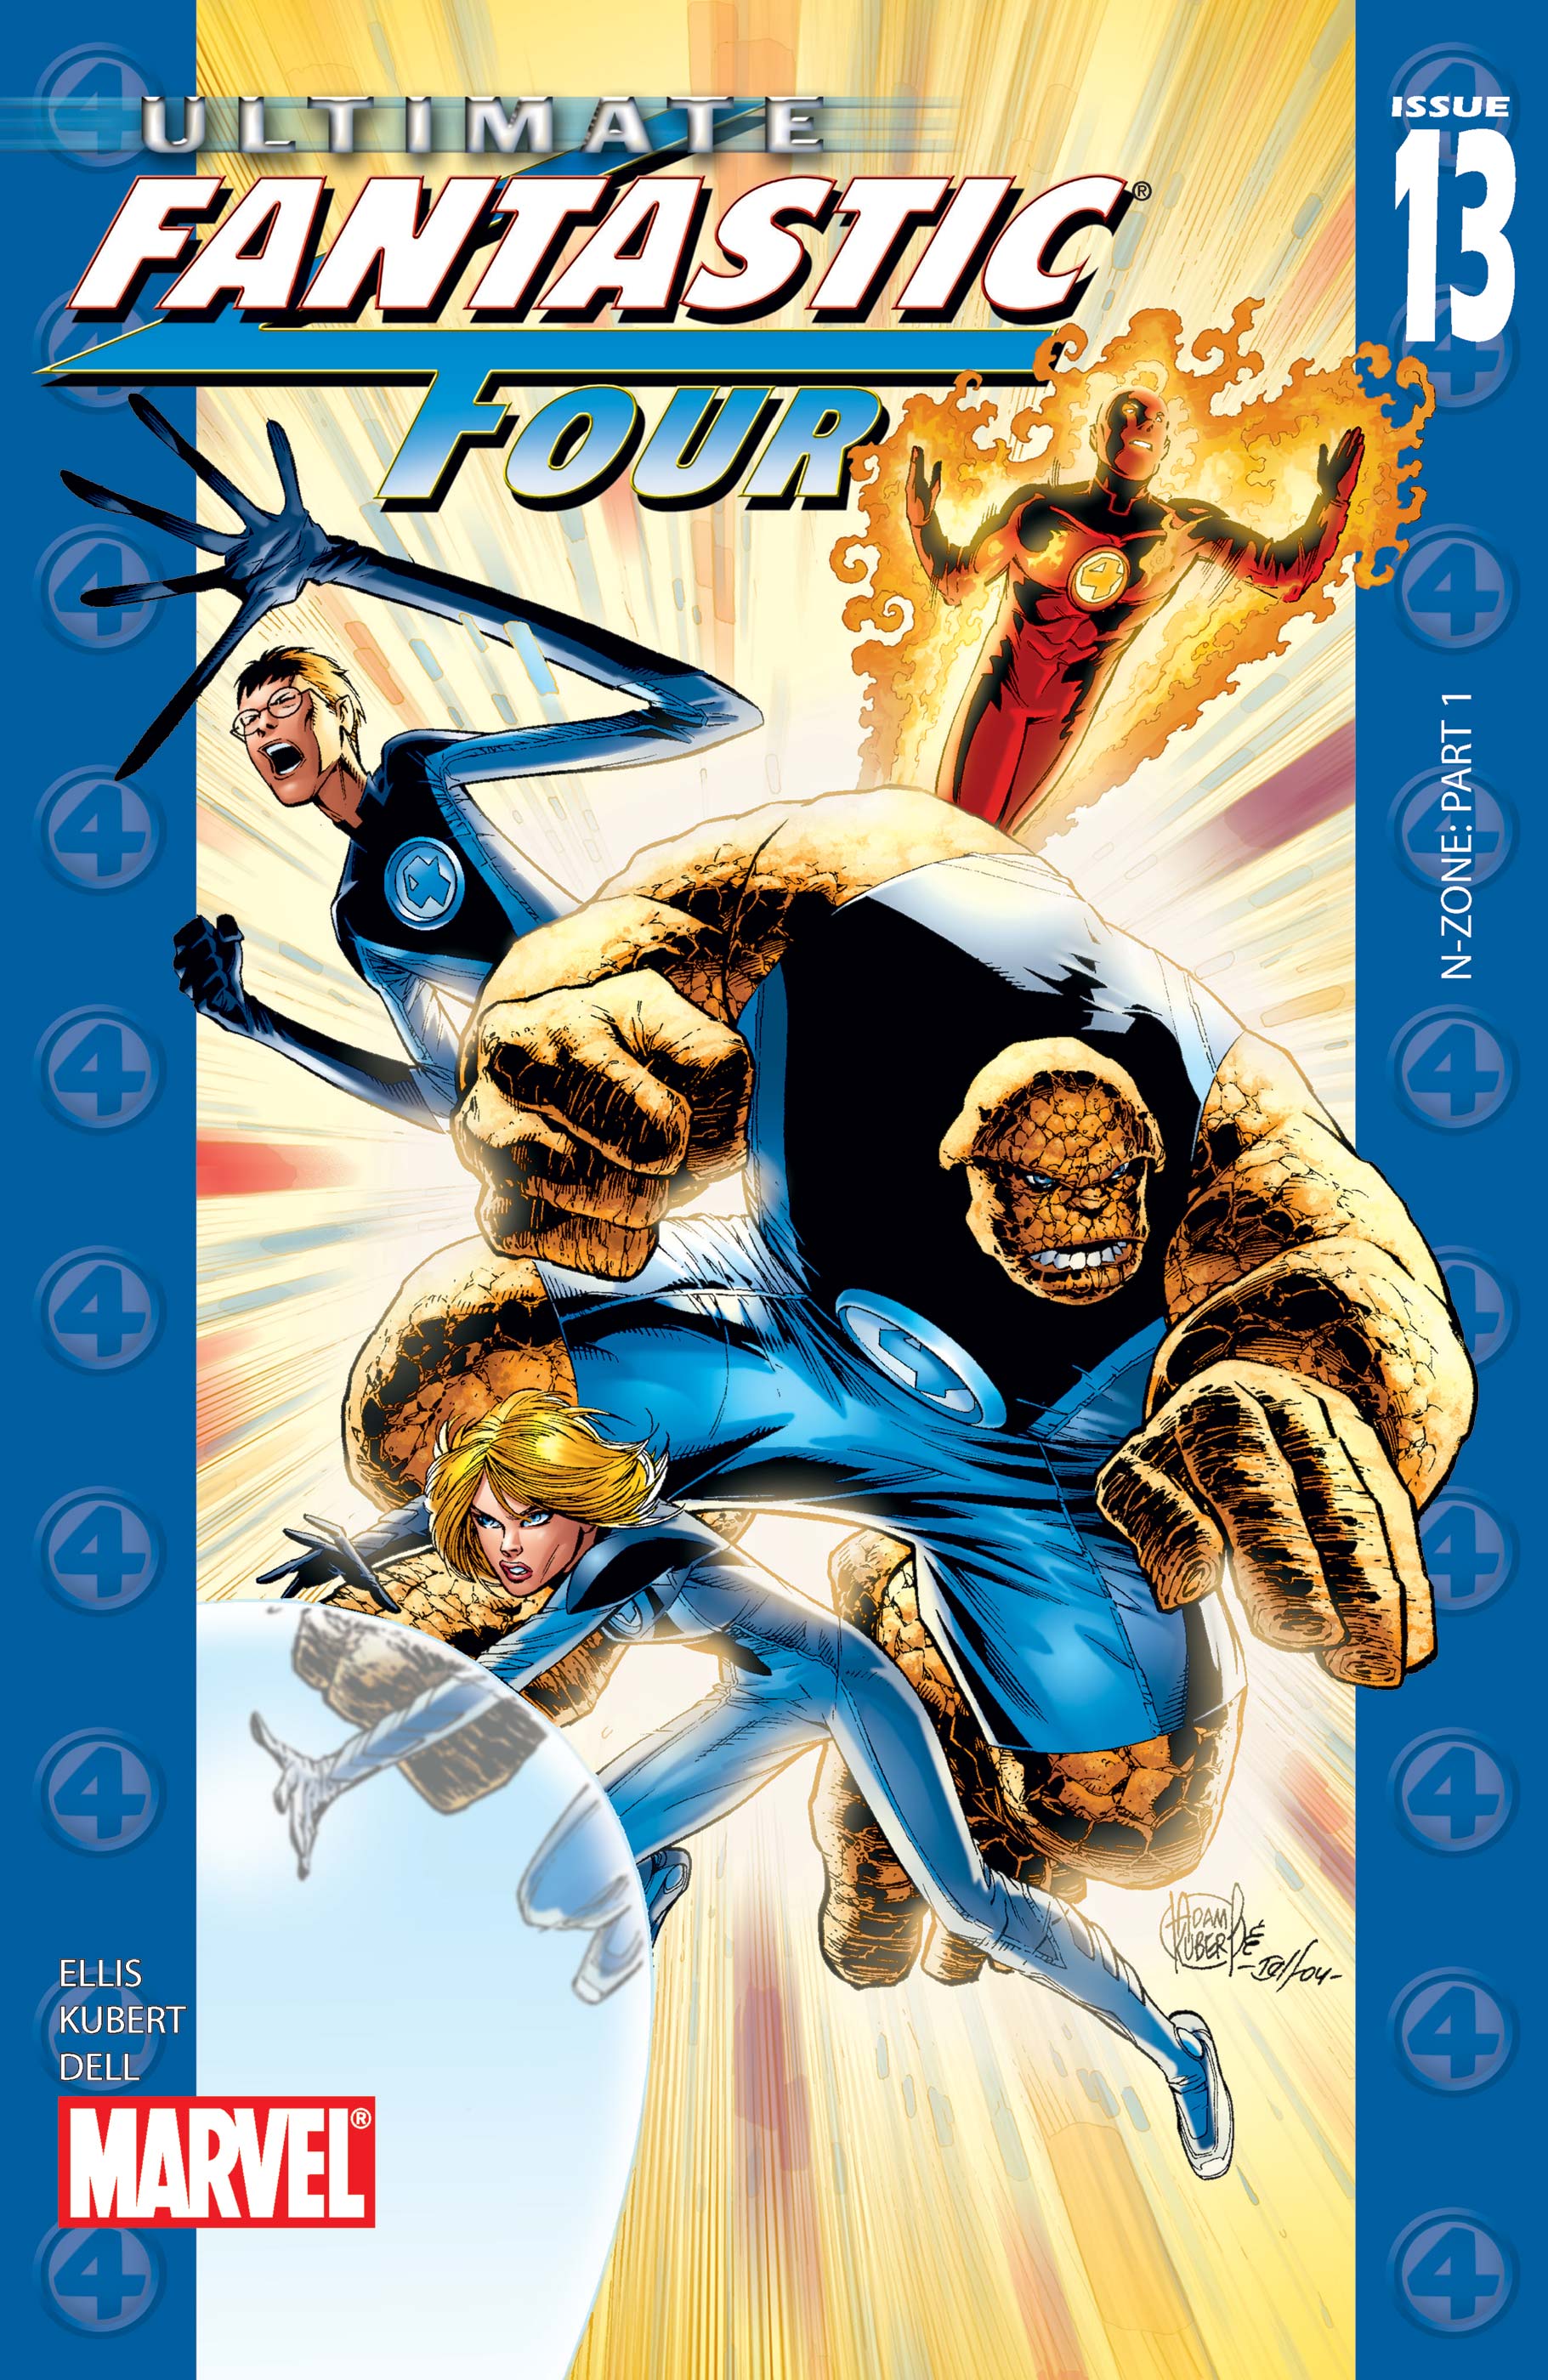 Ultimate Fantastic Four (2003) #13